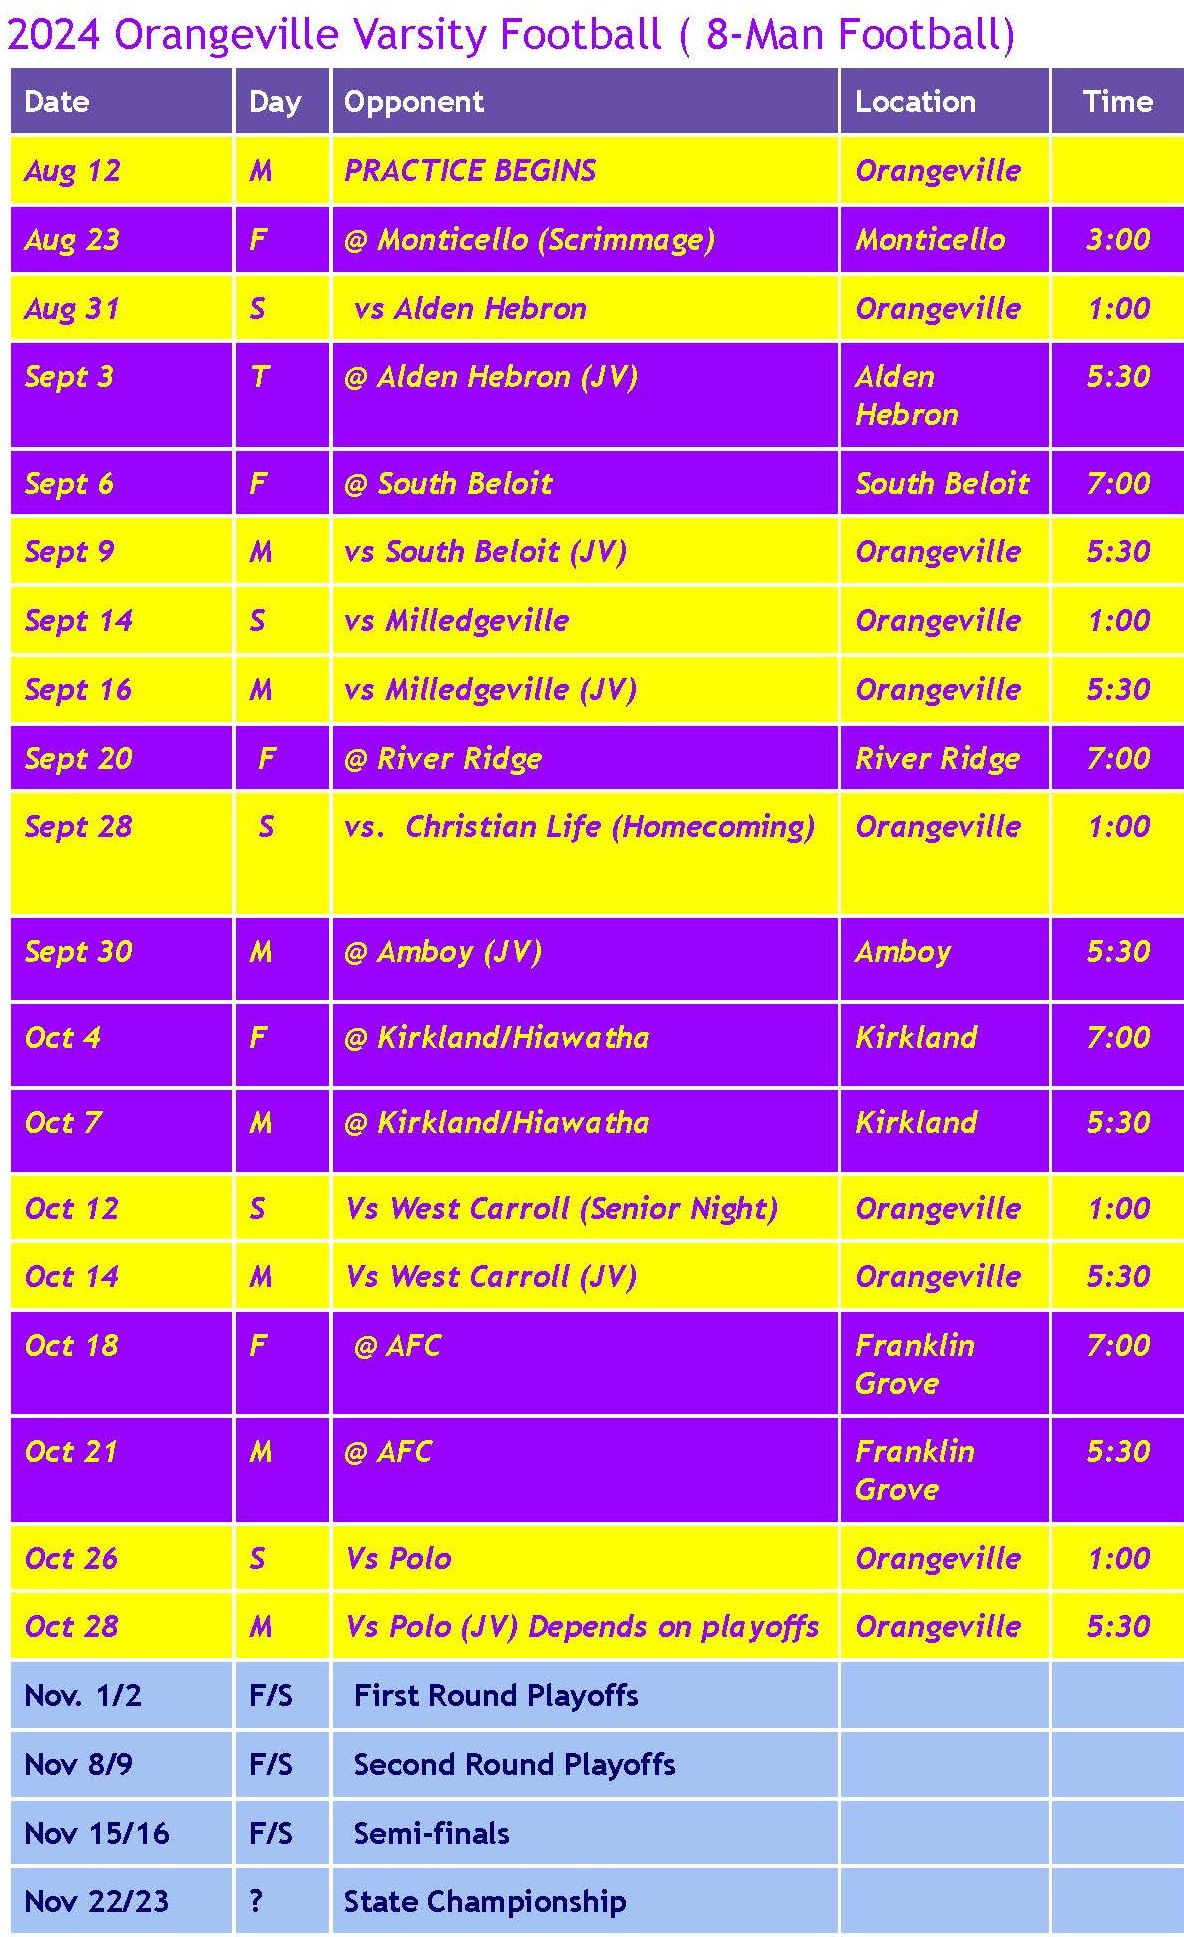 2024 OHS Football schedule